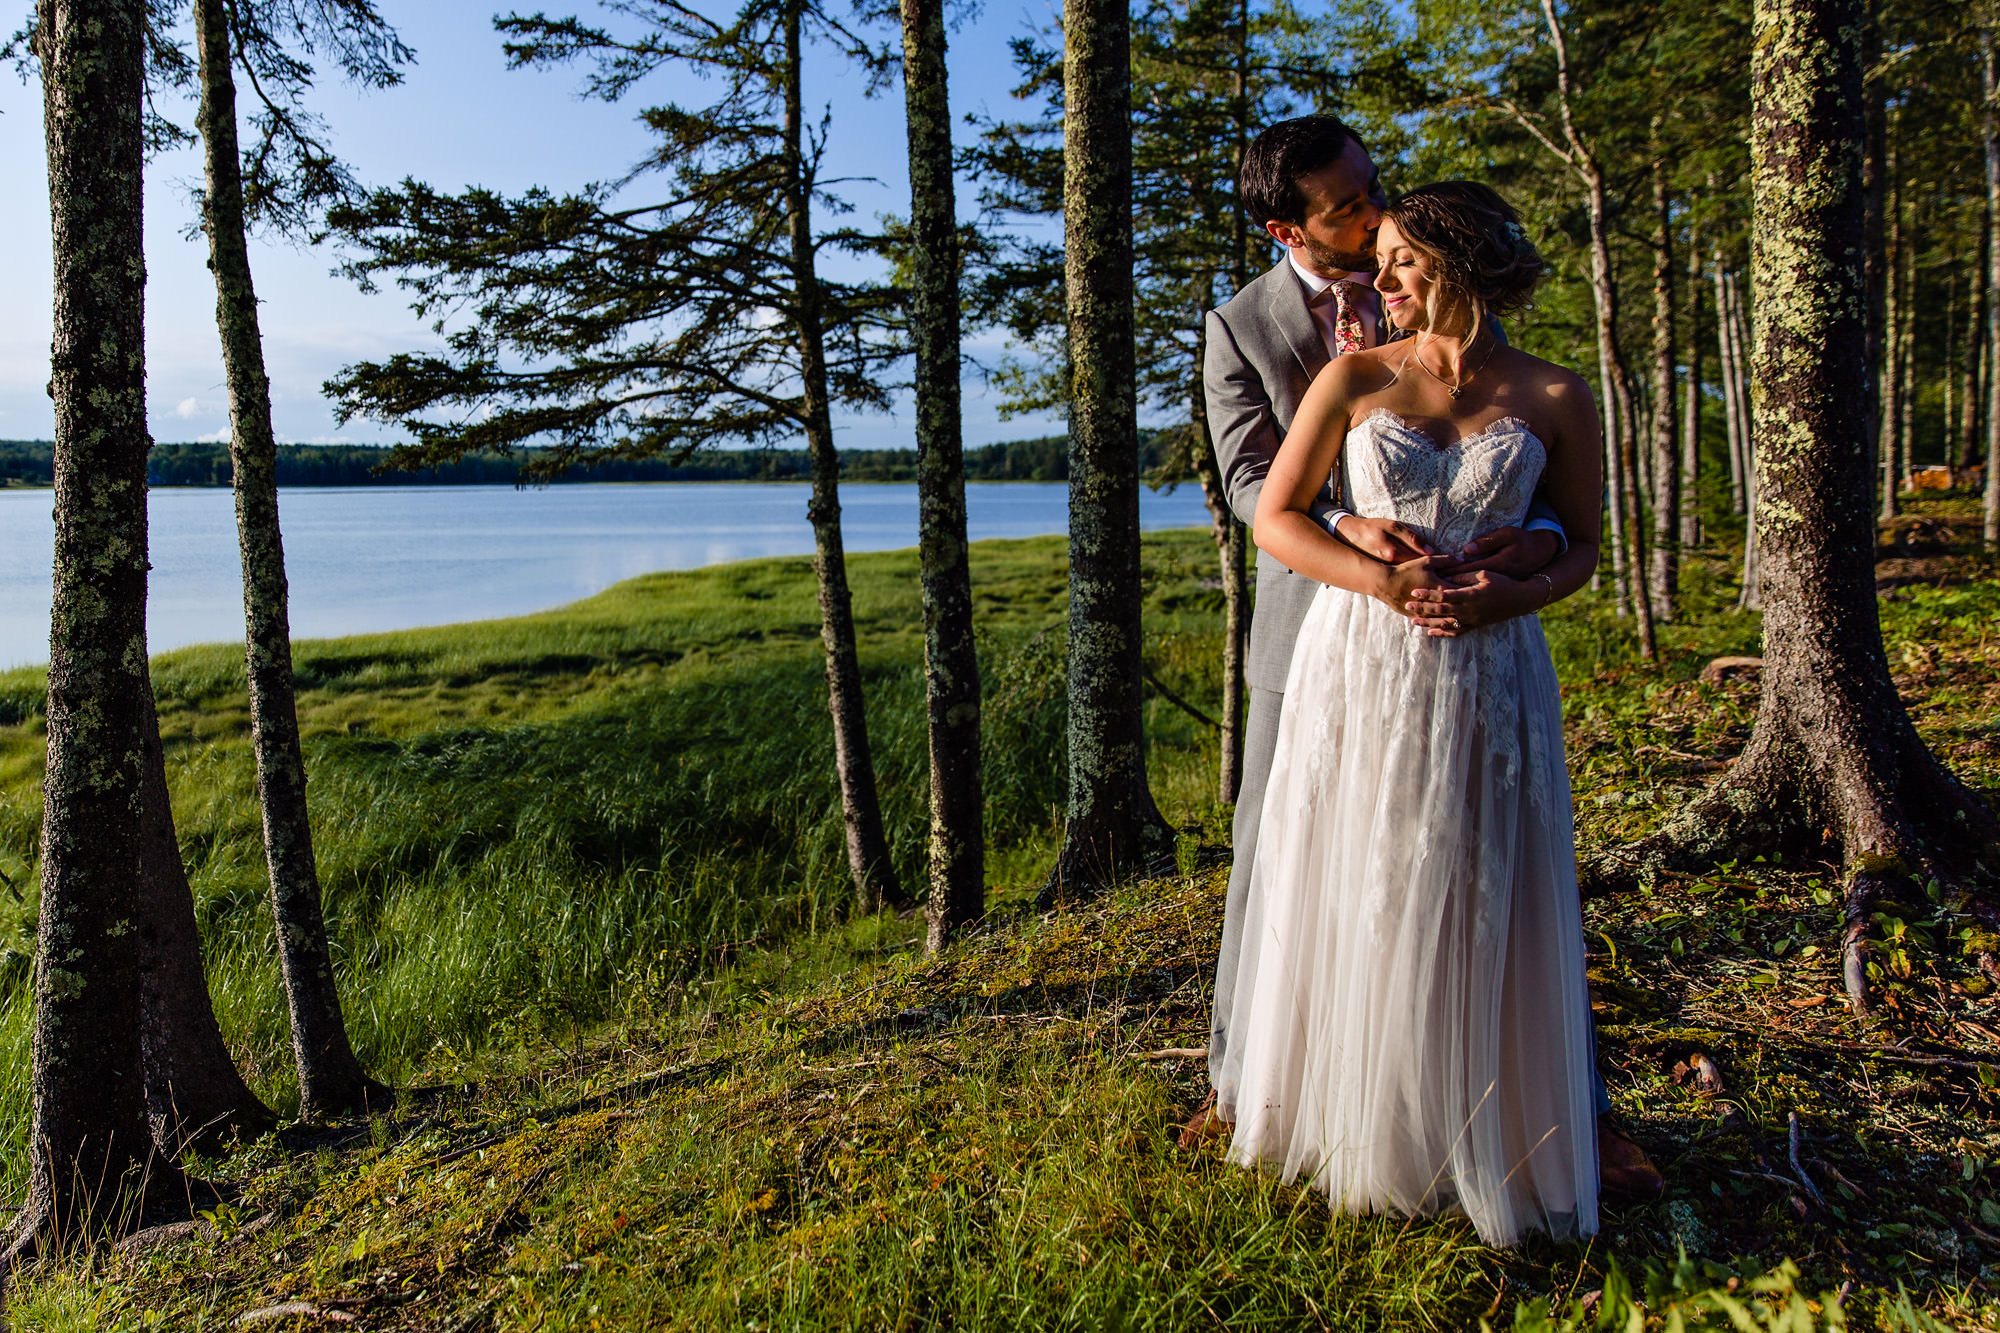 Dramatic wedding portraits taken in Lamoine, Maine